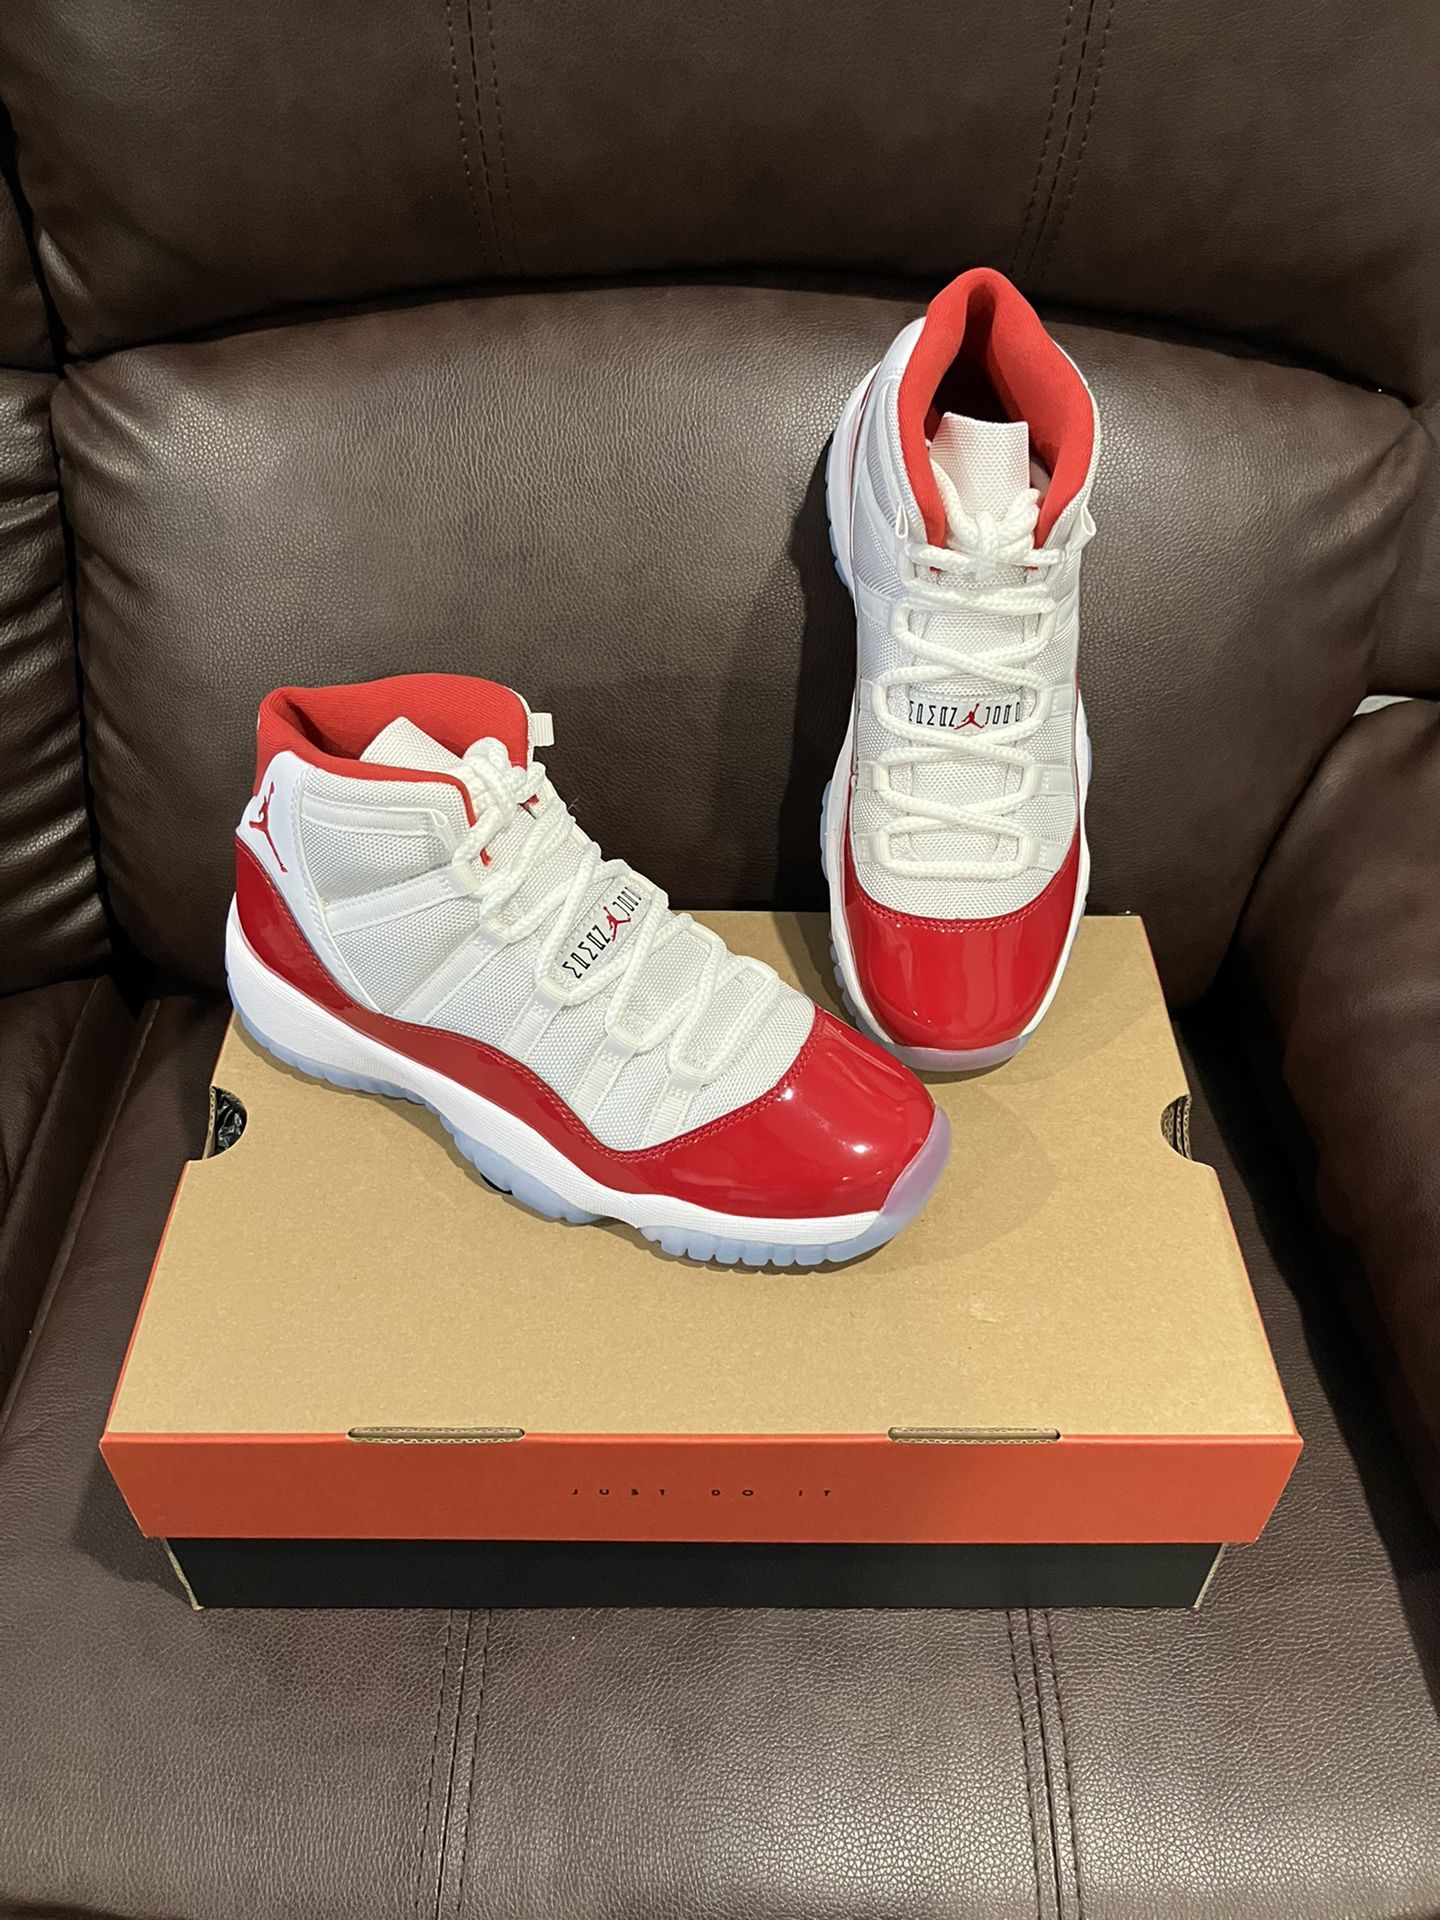 Nike Air Jordan 11 Cherry Red Size 6Y Gs 